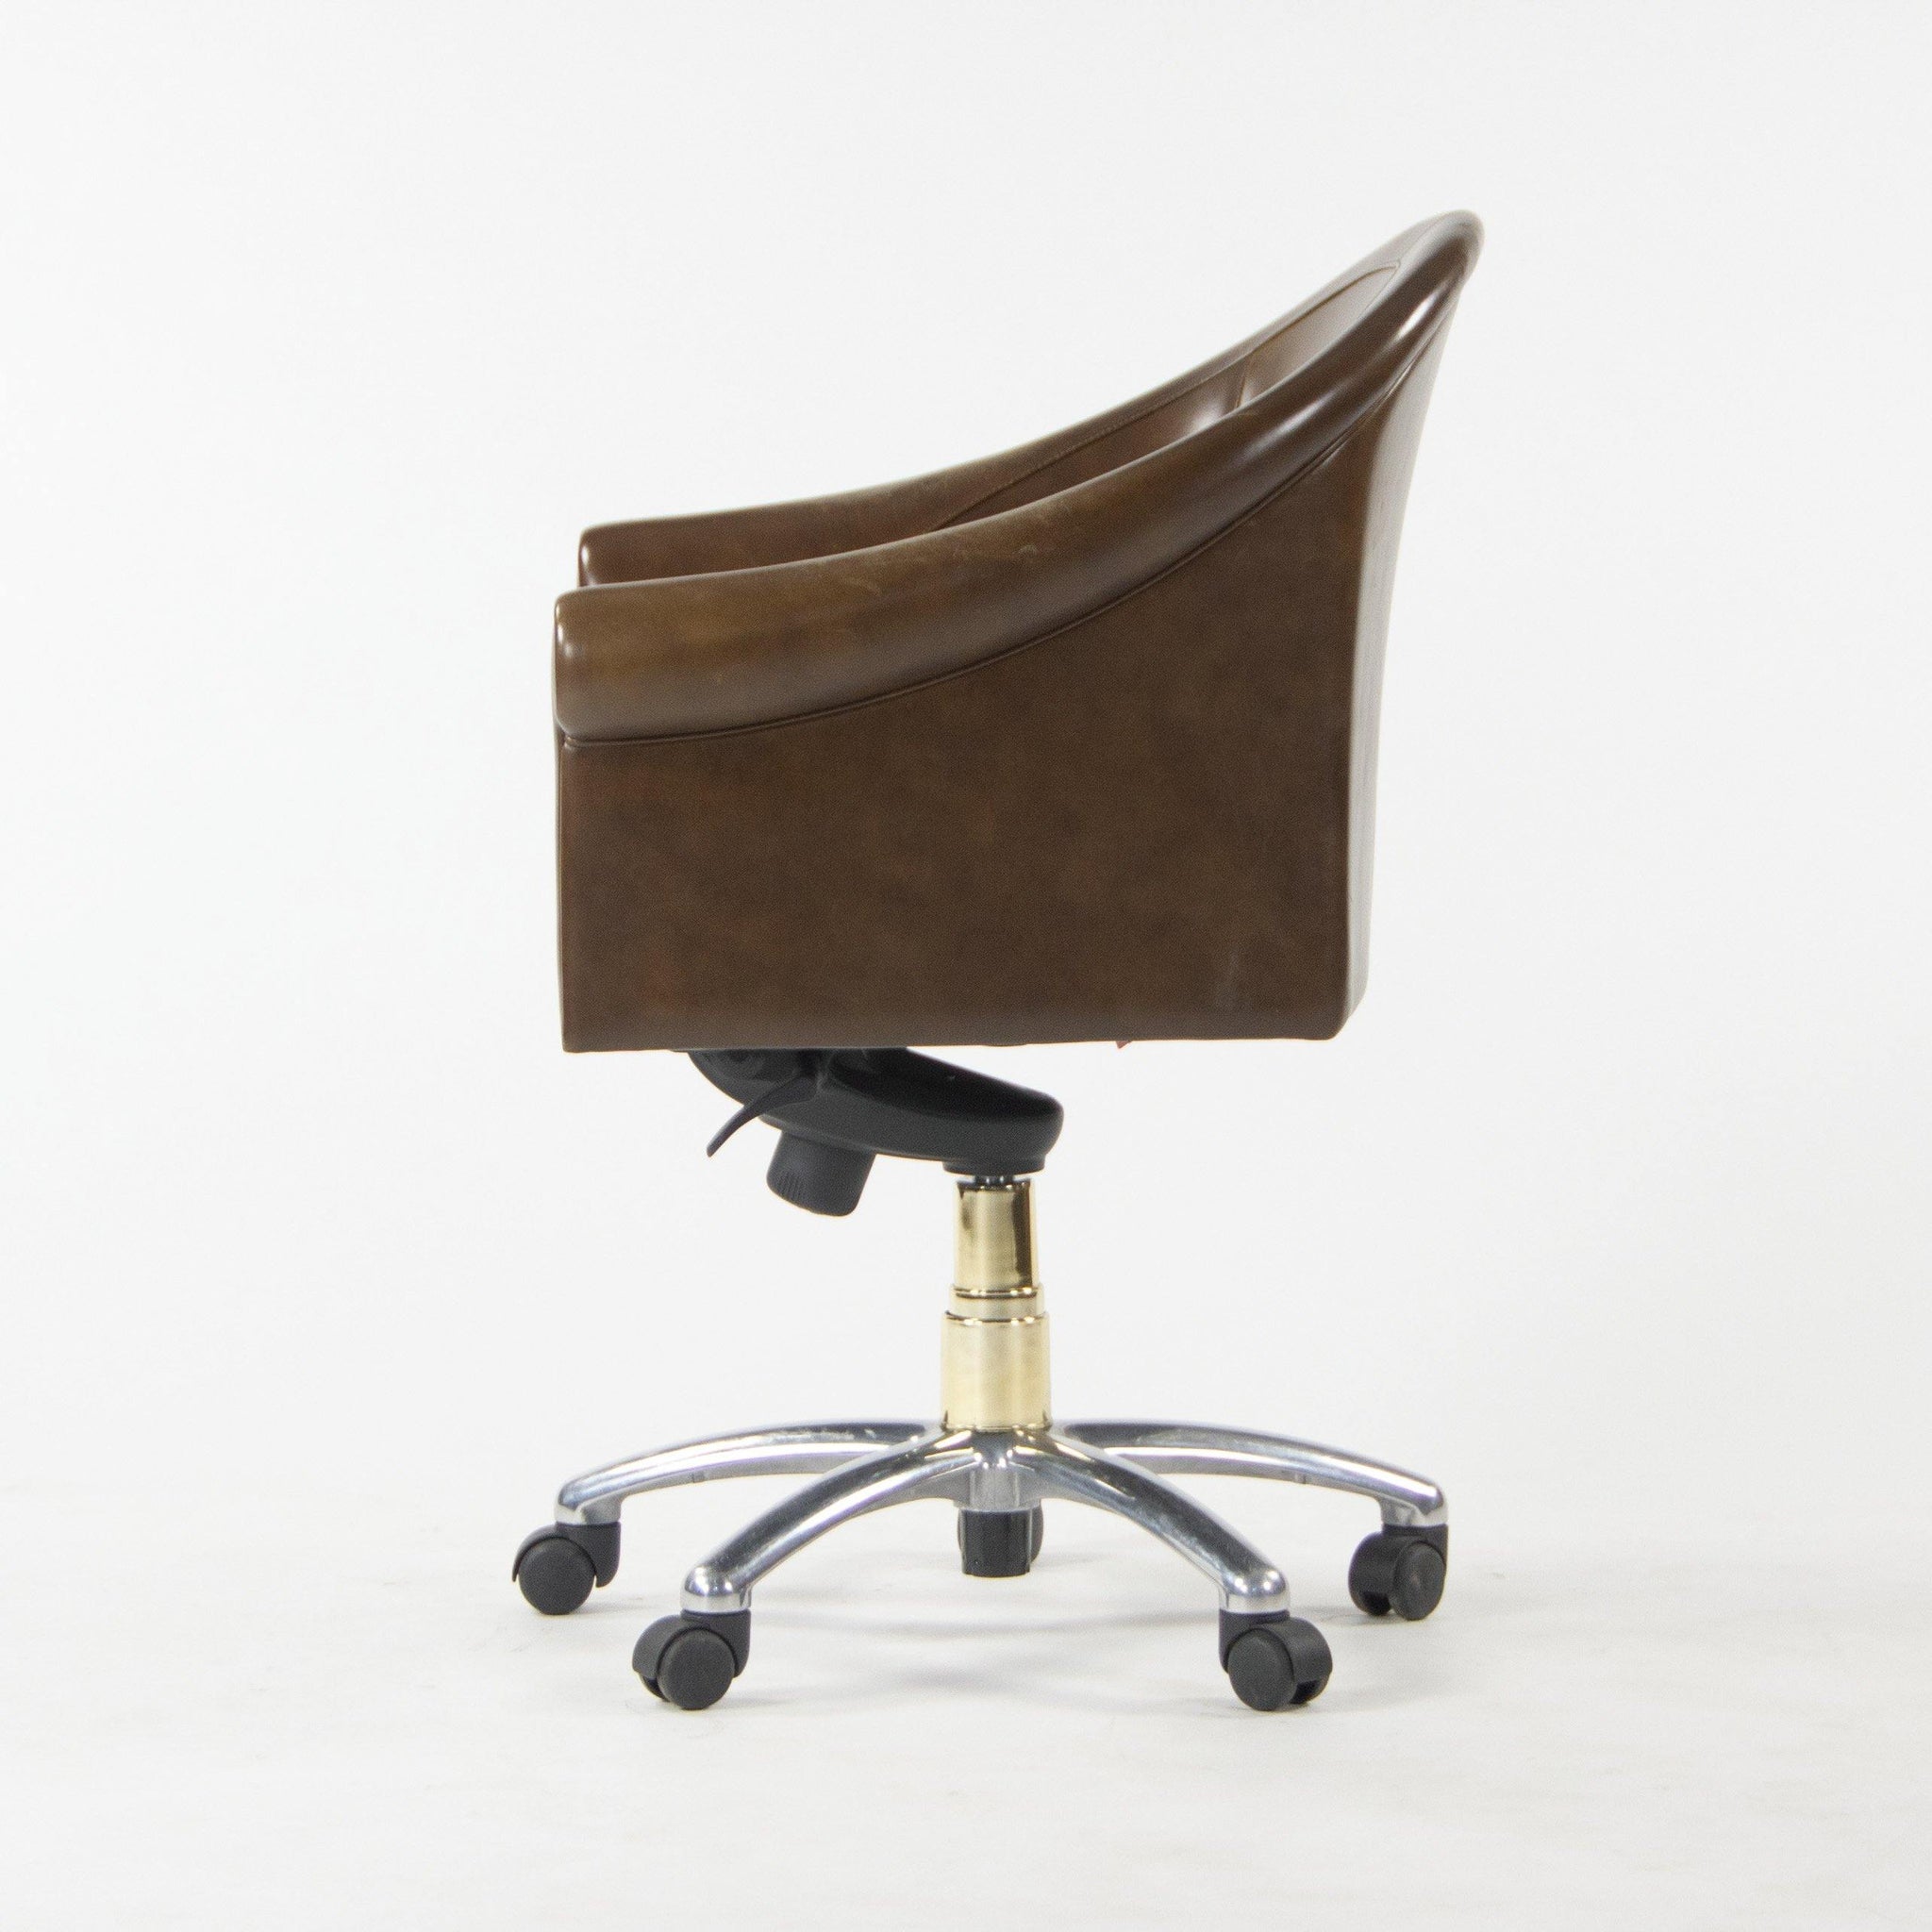 Poltrona Frau Brown Leather Luca Scacchetti Sinan Office Desk Chair Multiples Available - Rarify Inc.